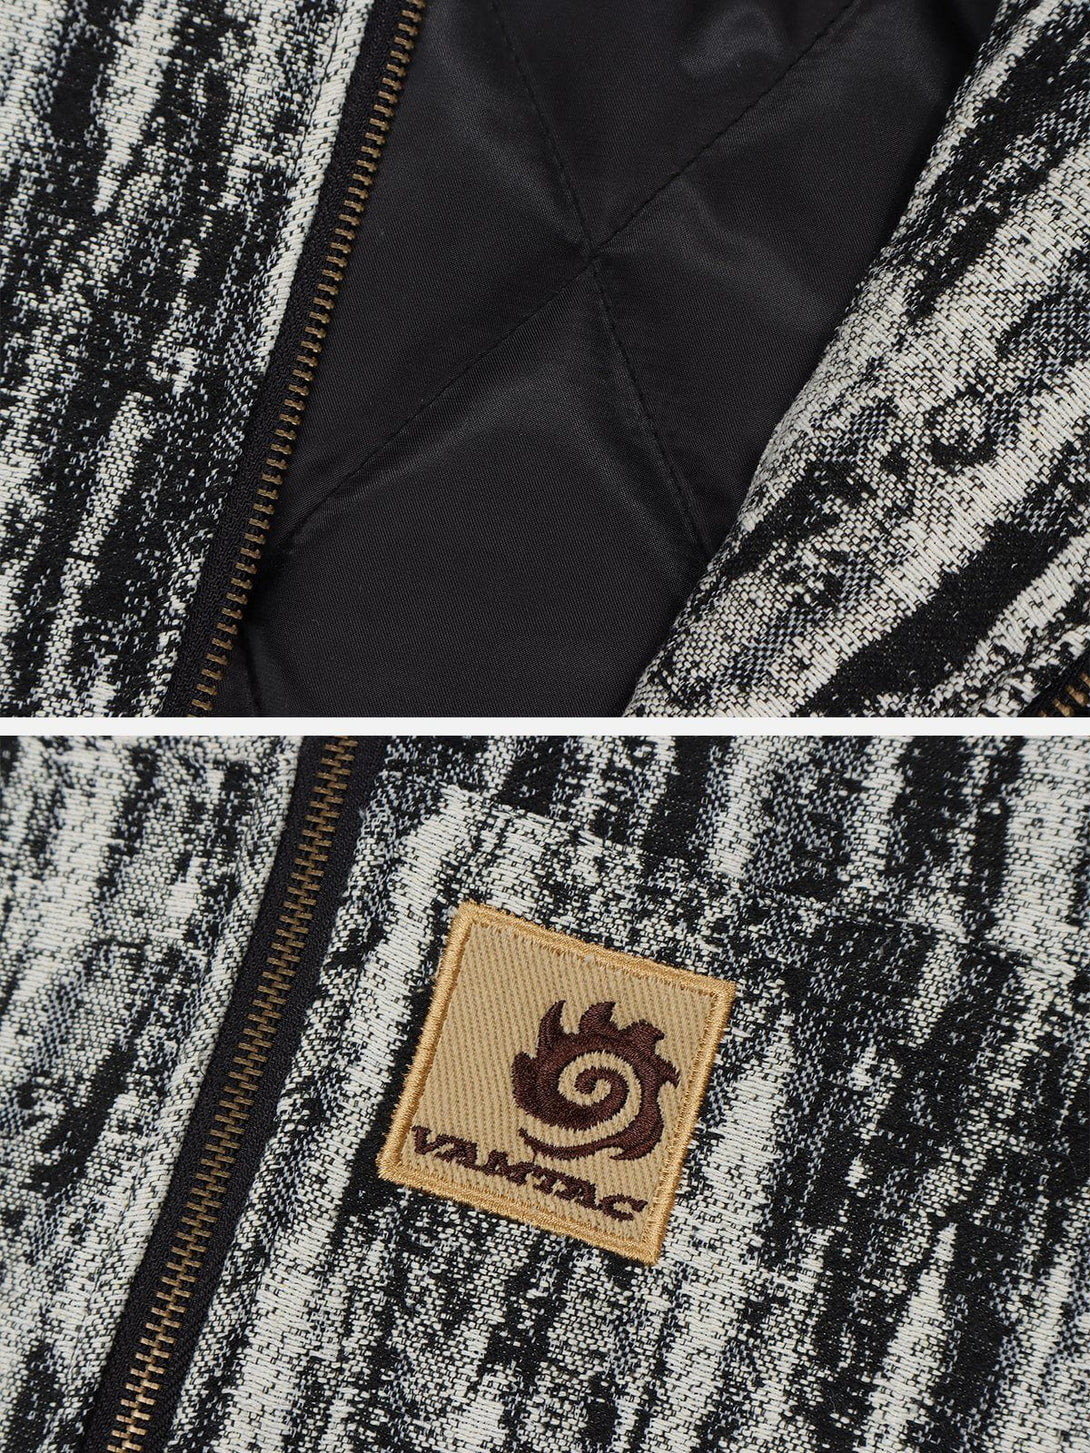 Majesda® - Labeling Embroidery Jacket outfit ideas, streetwear fashion - majesda.com